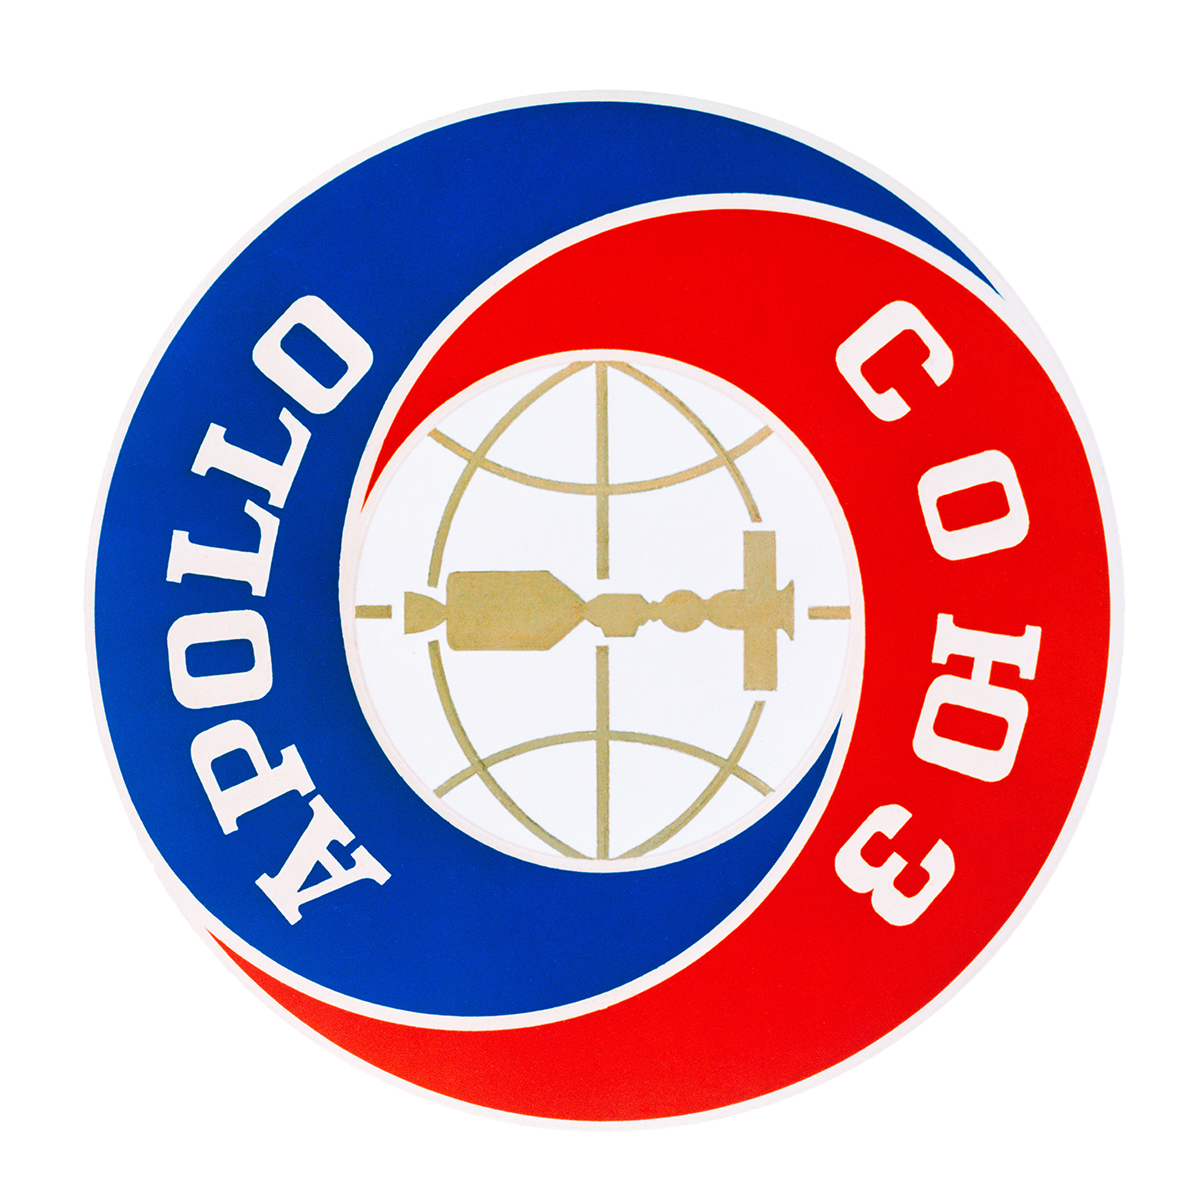 Apollo-Soyuz (Apollo-Soyuz Test Project)